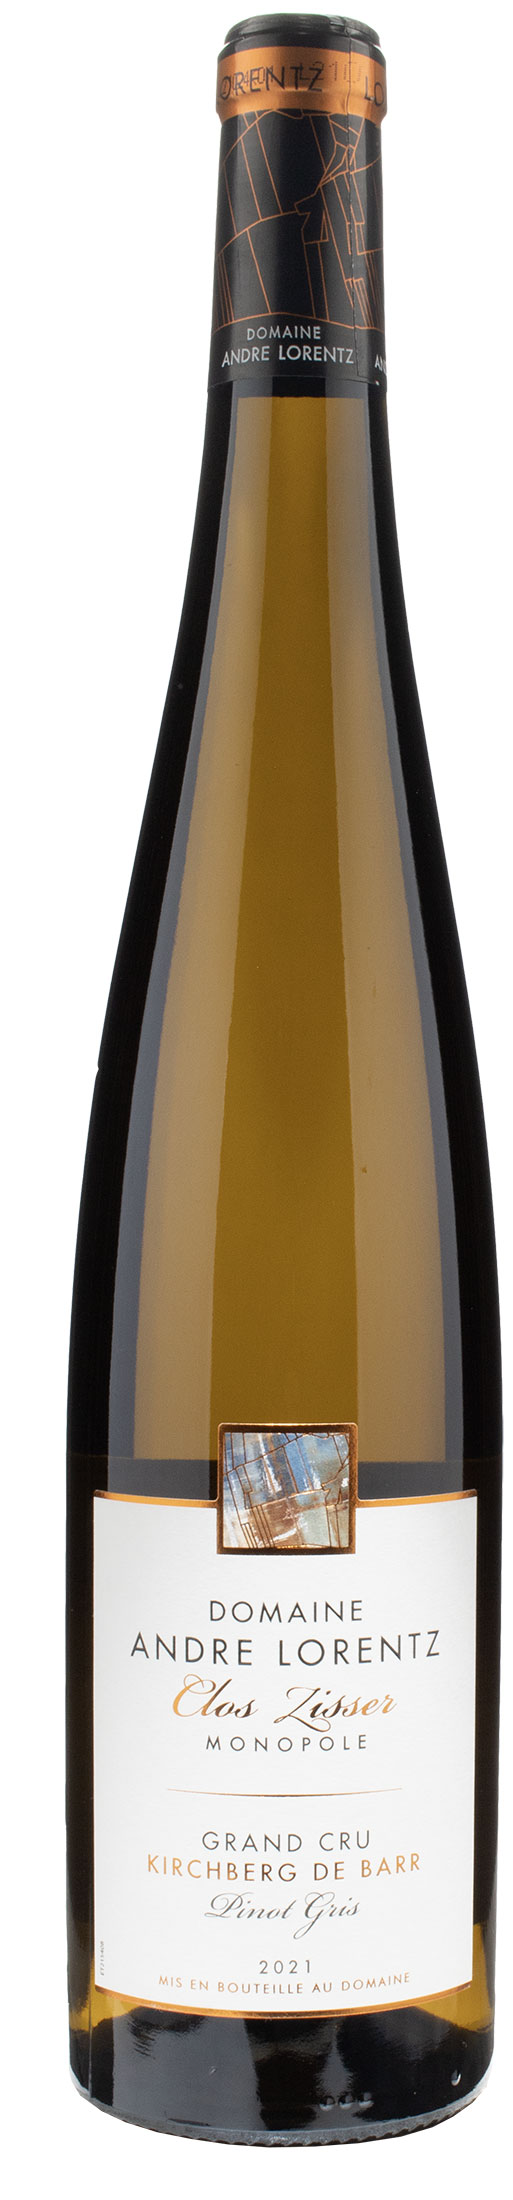 Domaine André Lorentz Alsace Pinot Gris Grand Cru Kirchberg de Barr Clos Zisser